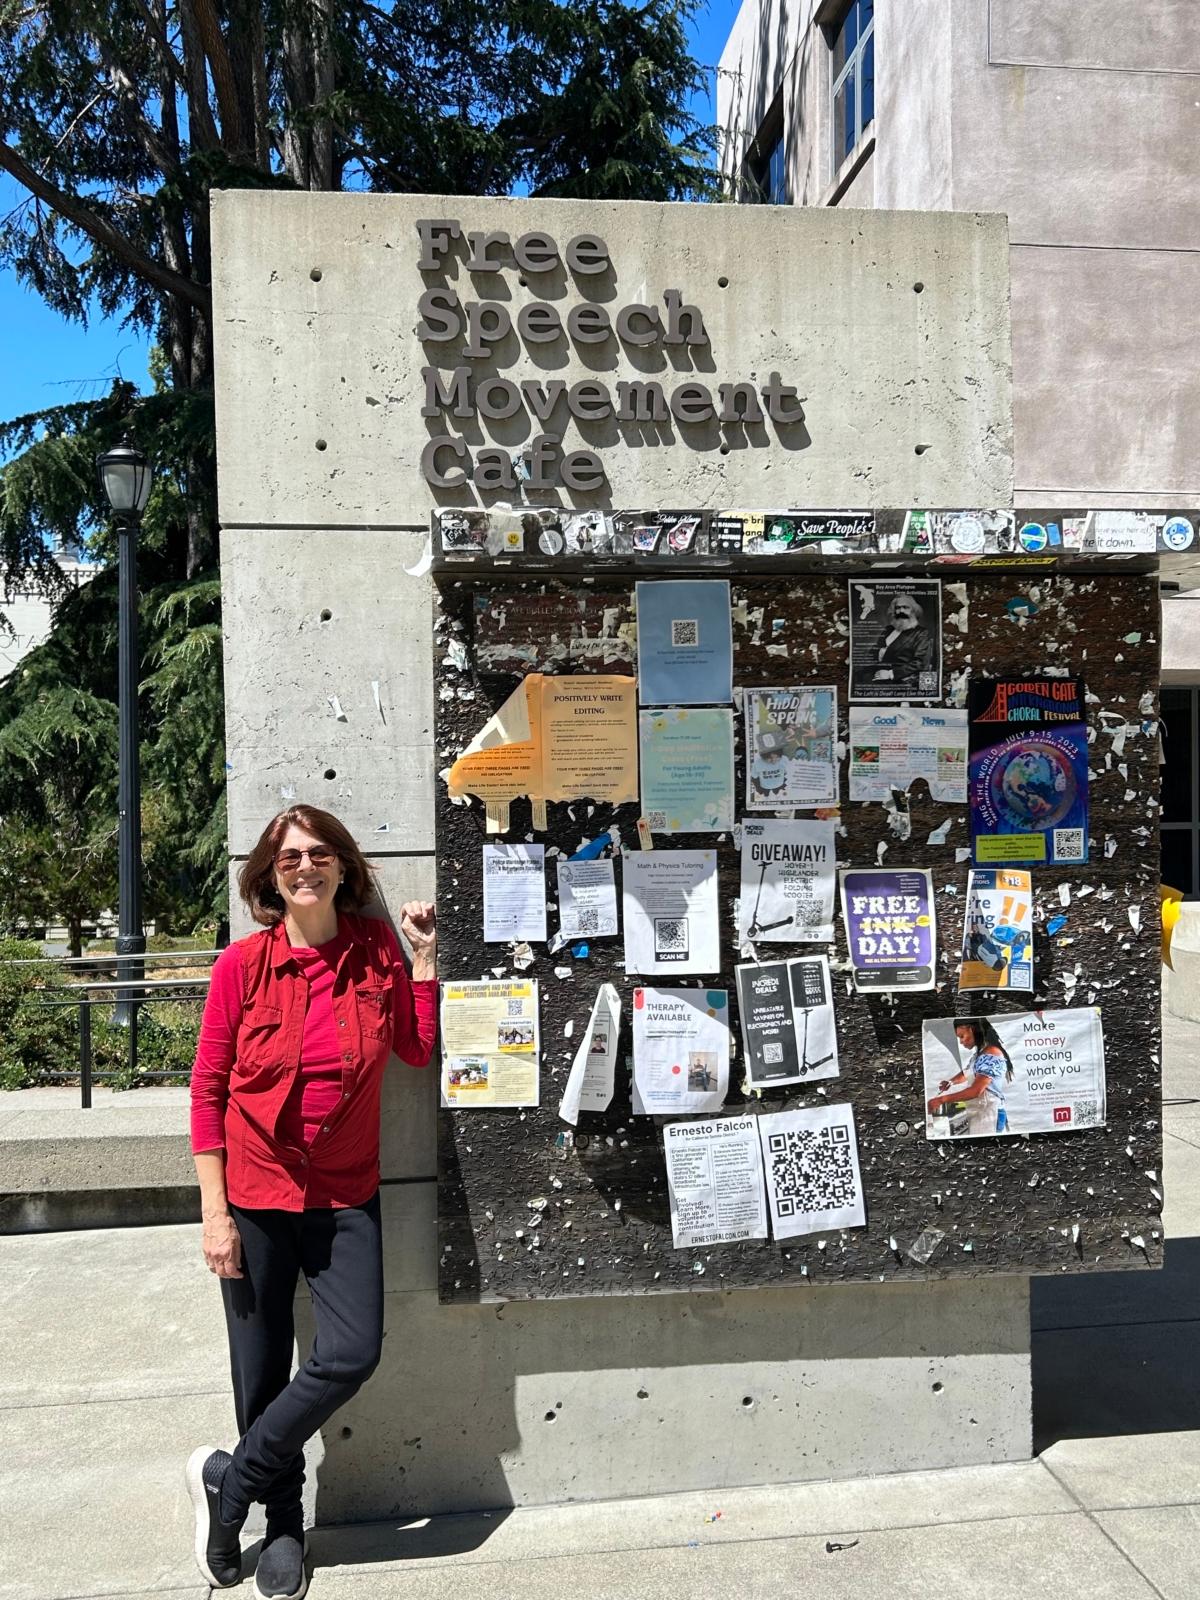 The Free Speech Movement Cafe in Berkeley, Calif., on July 30, 2023. (Courtesy of Loretta Breuning)